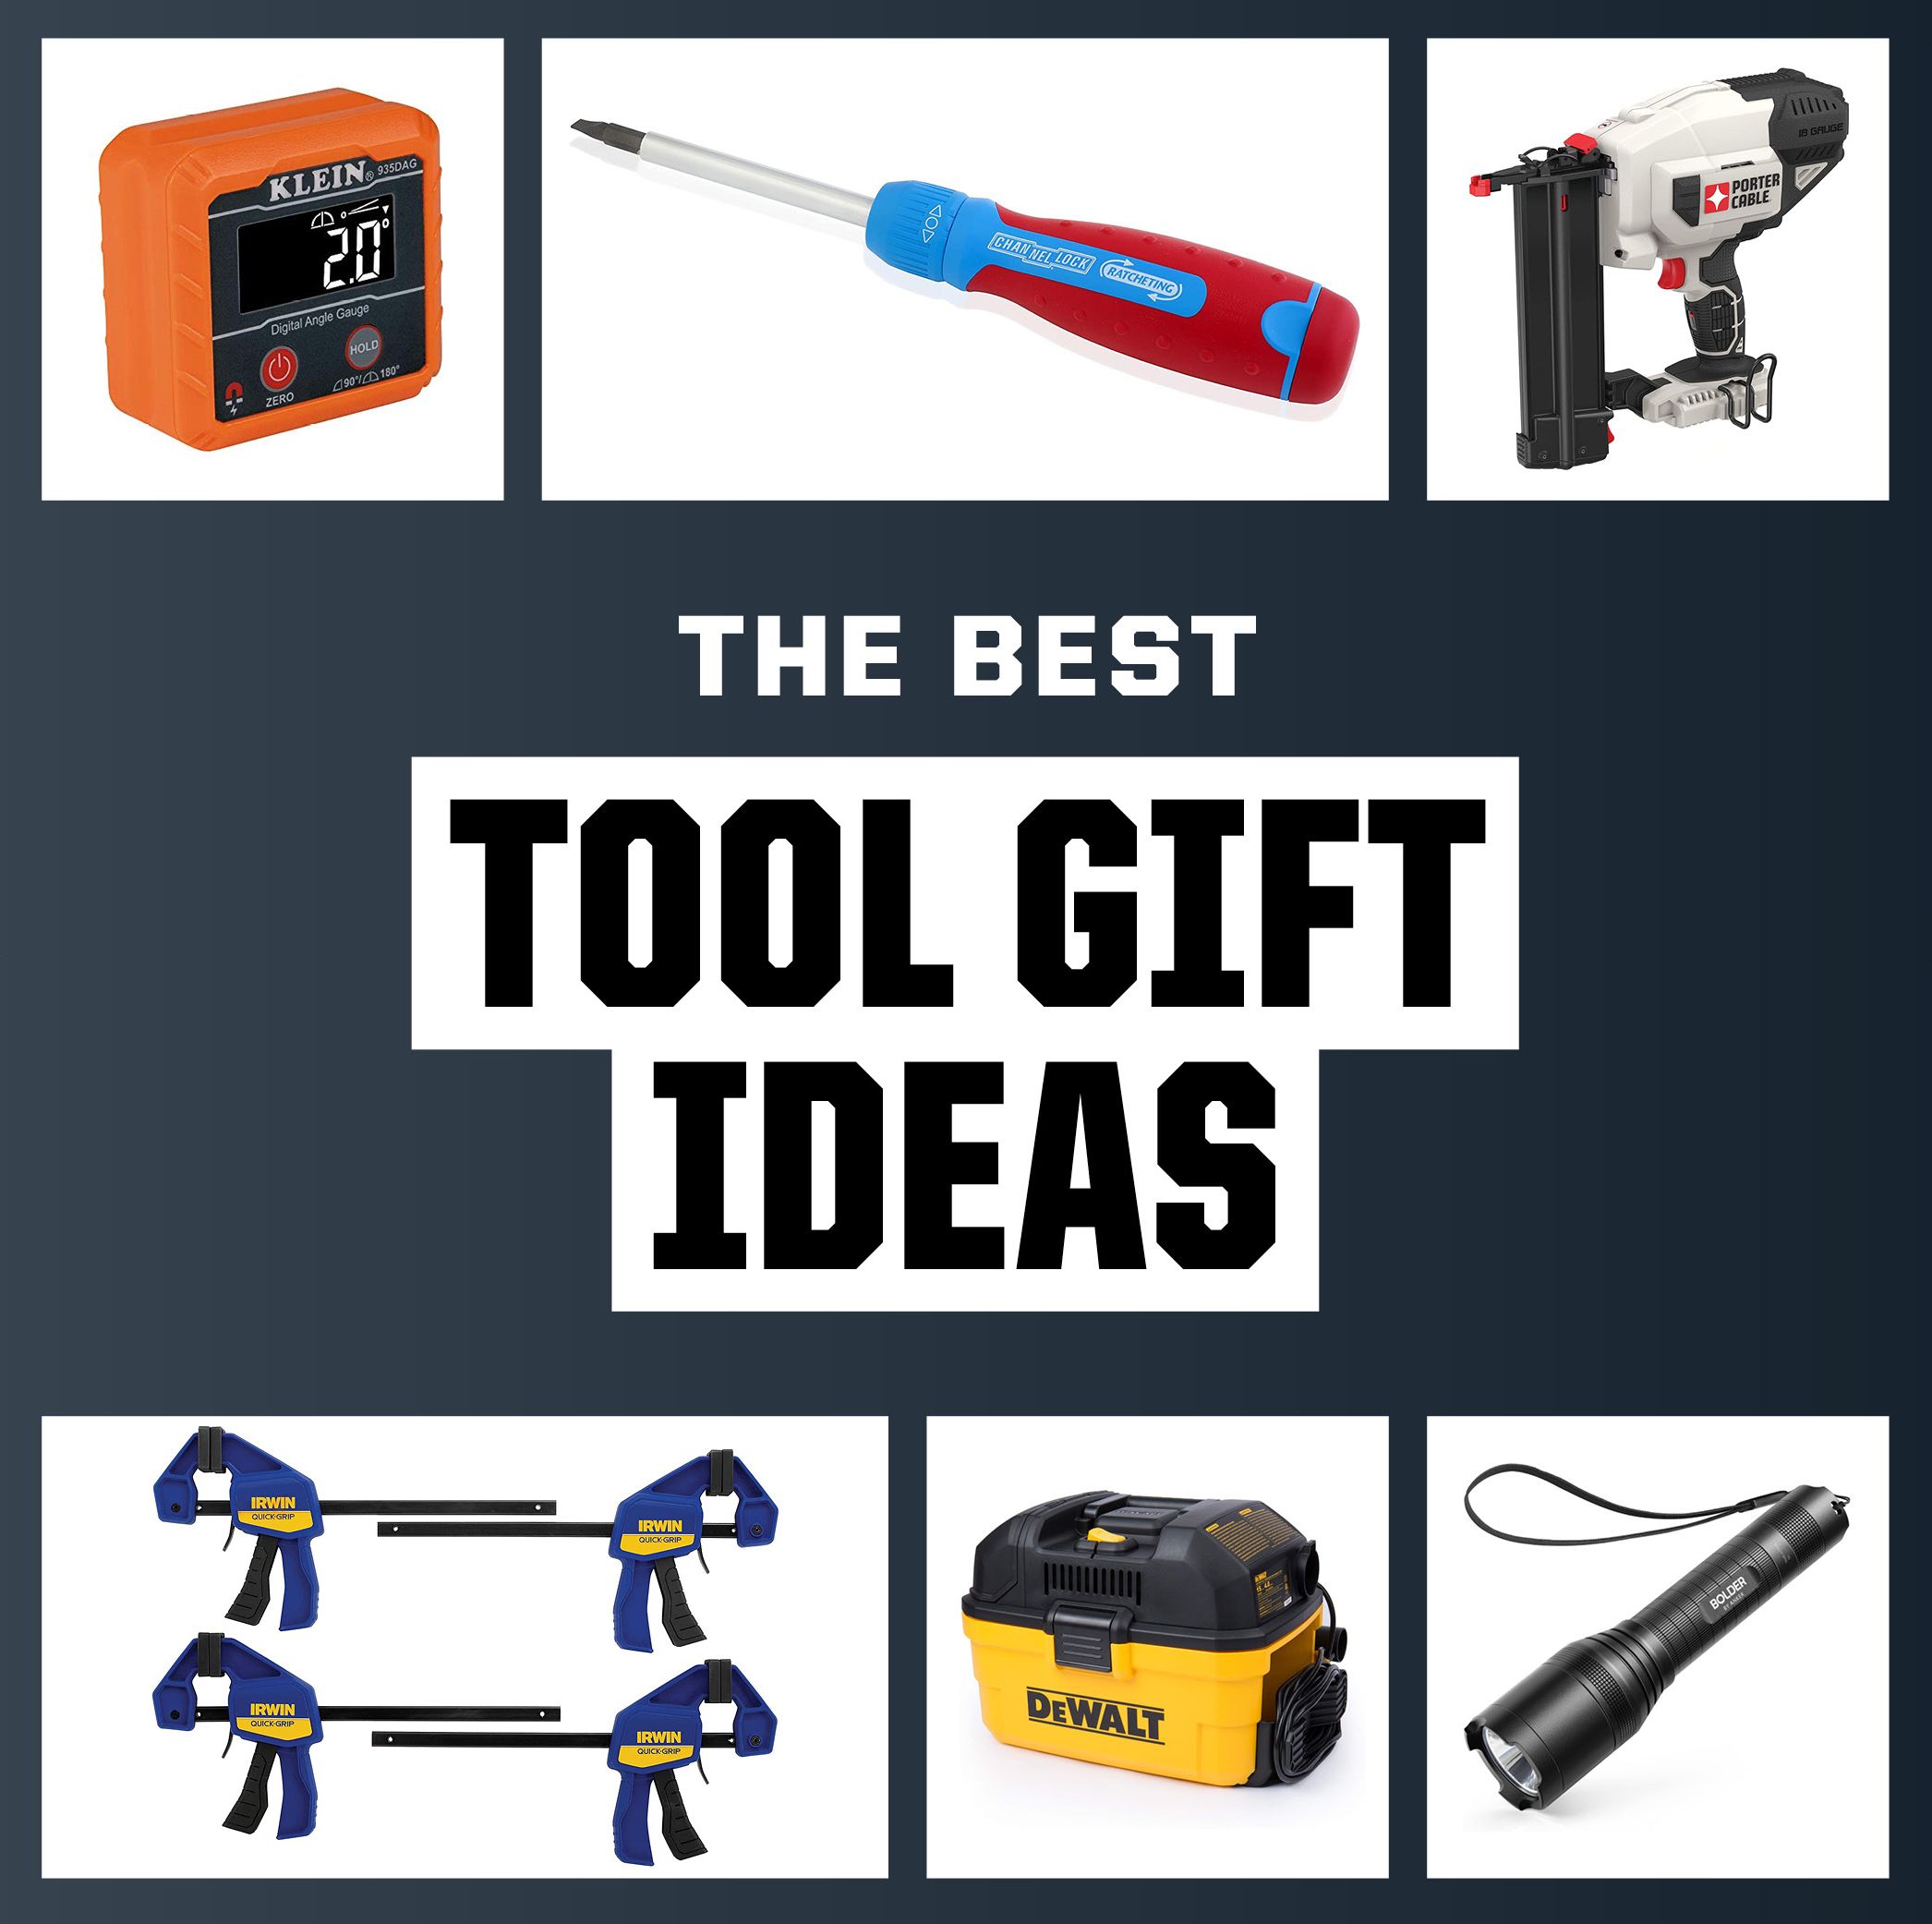 35 Best Tool Gift Ideas That Won't Break the Bank